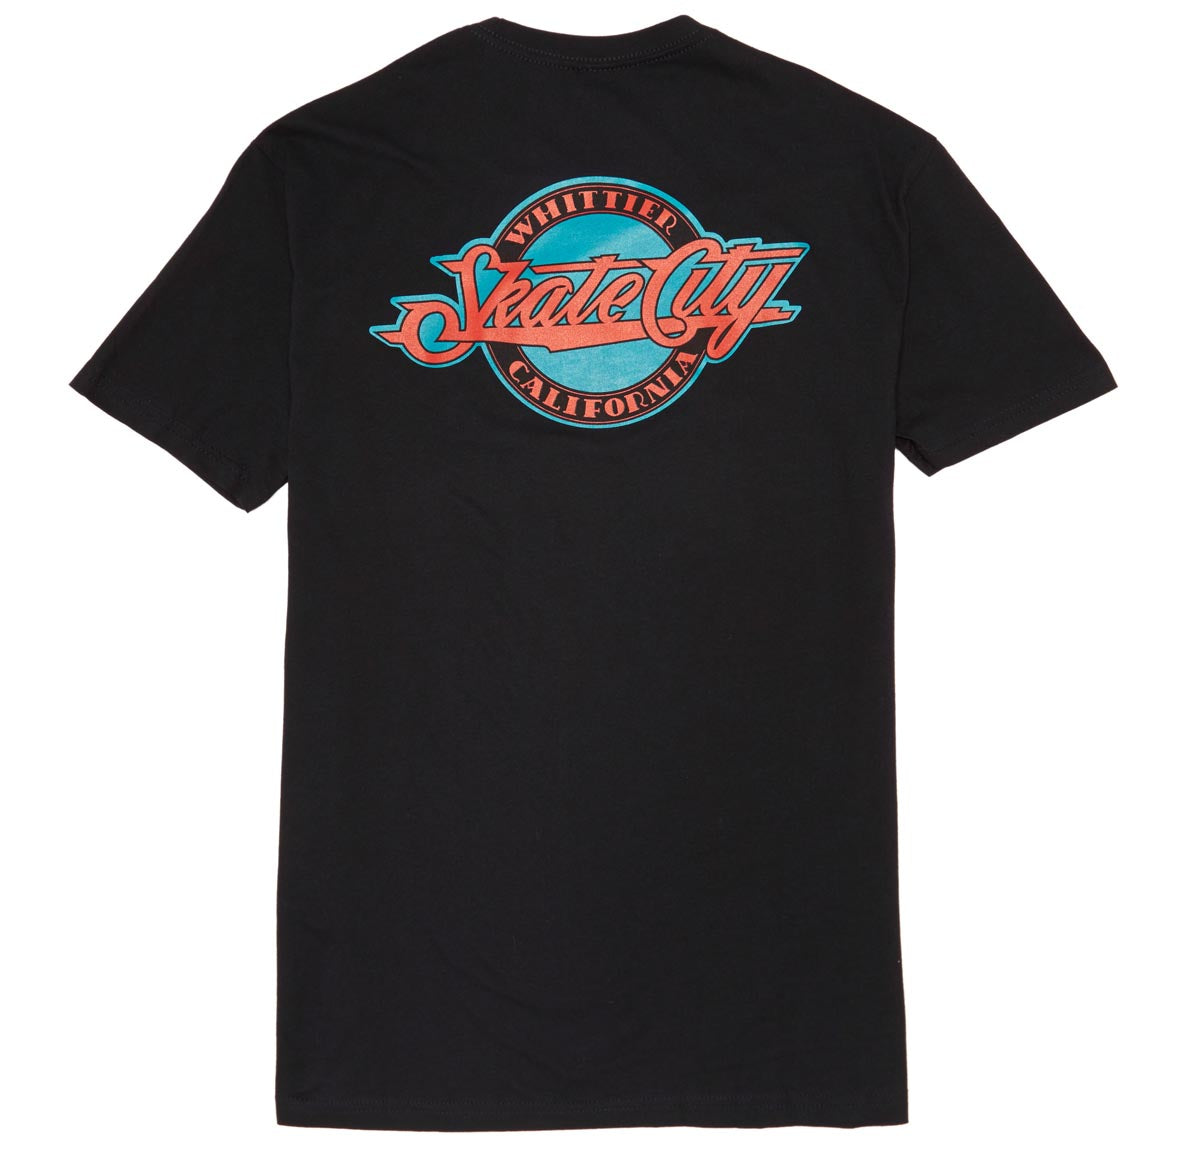 45RPM Vintage Skate City Skatepark T-Shirt - Black image 1